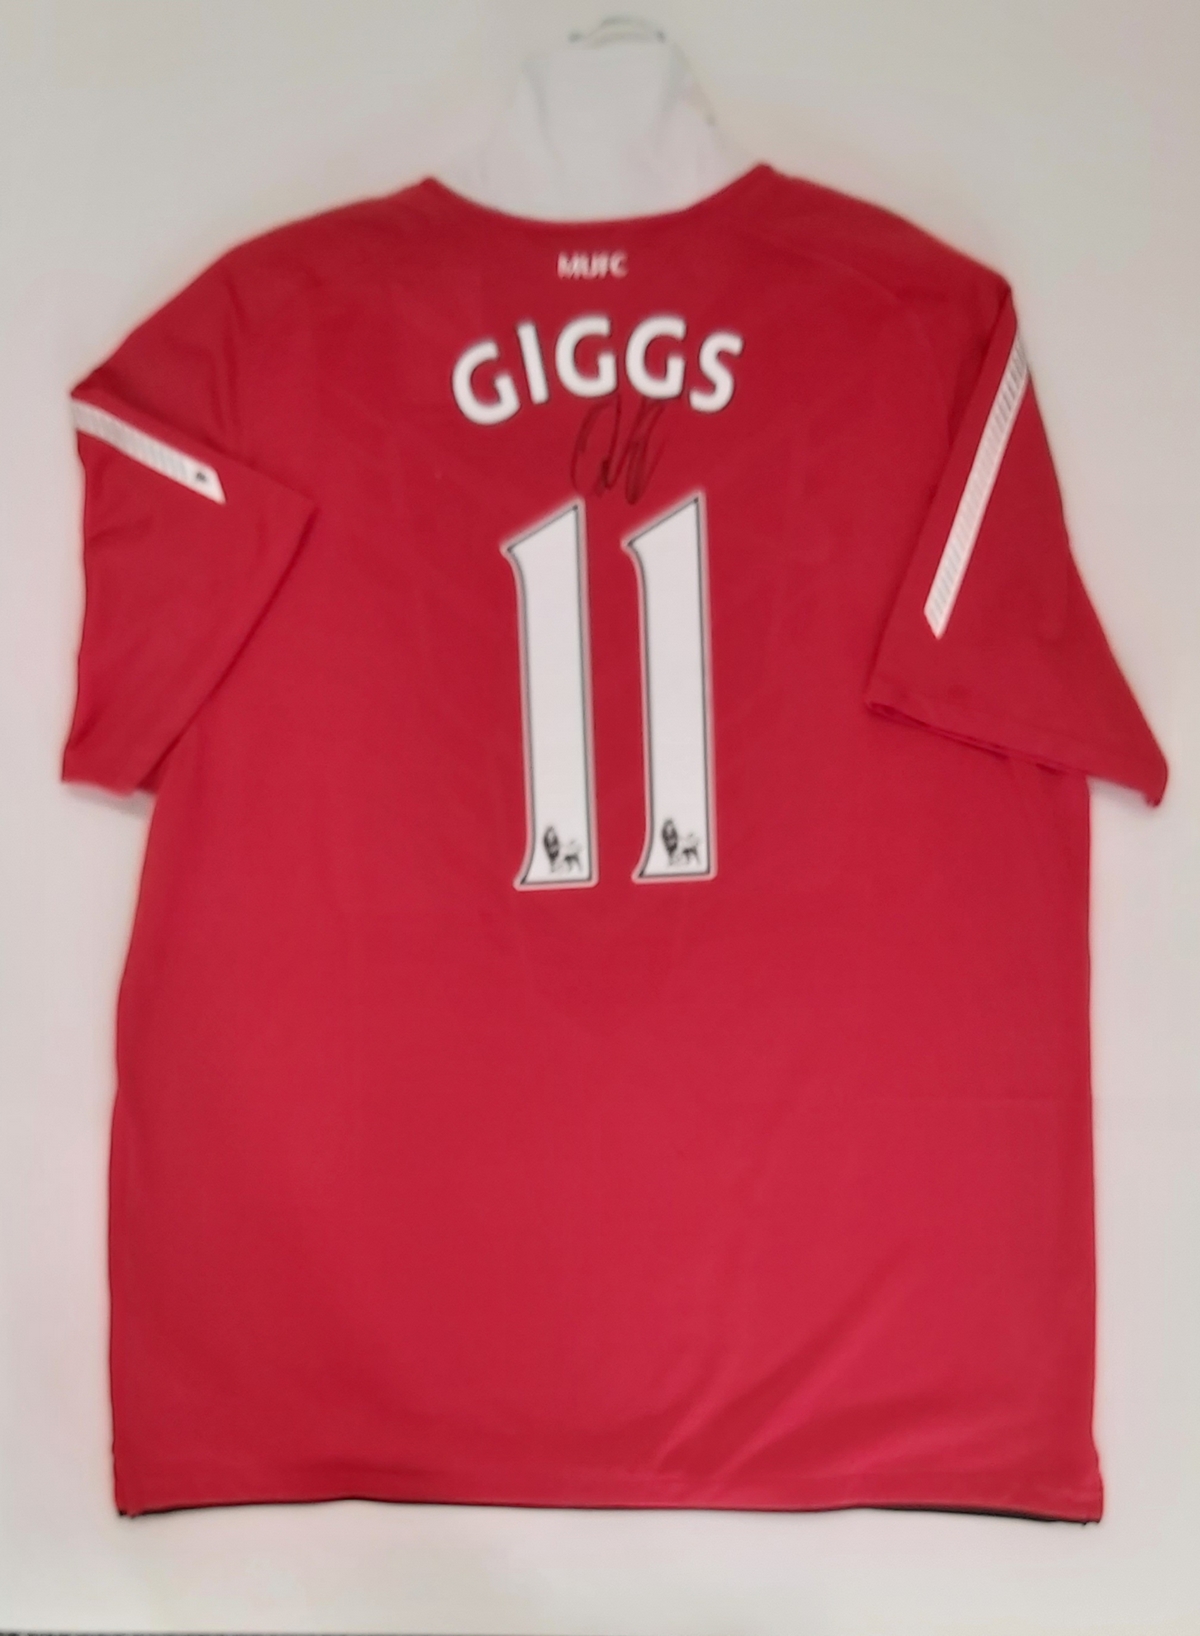 Ryan Giggs 11 Signed Football Shirt